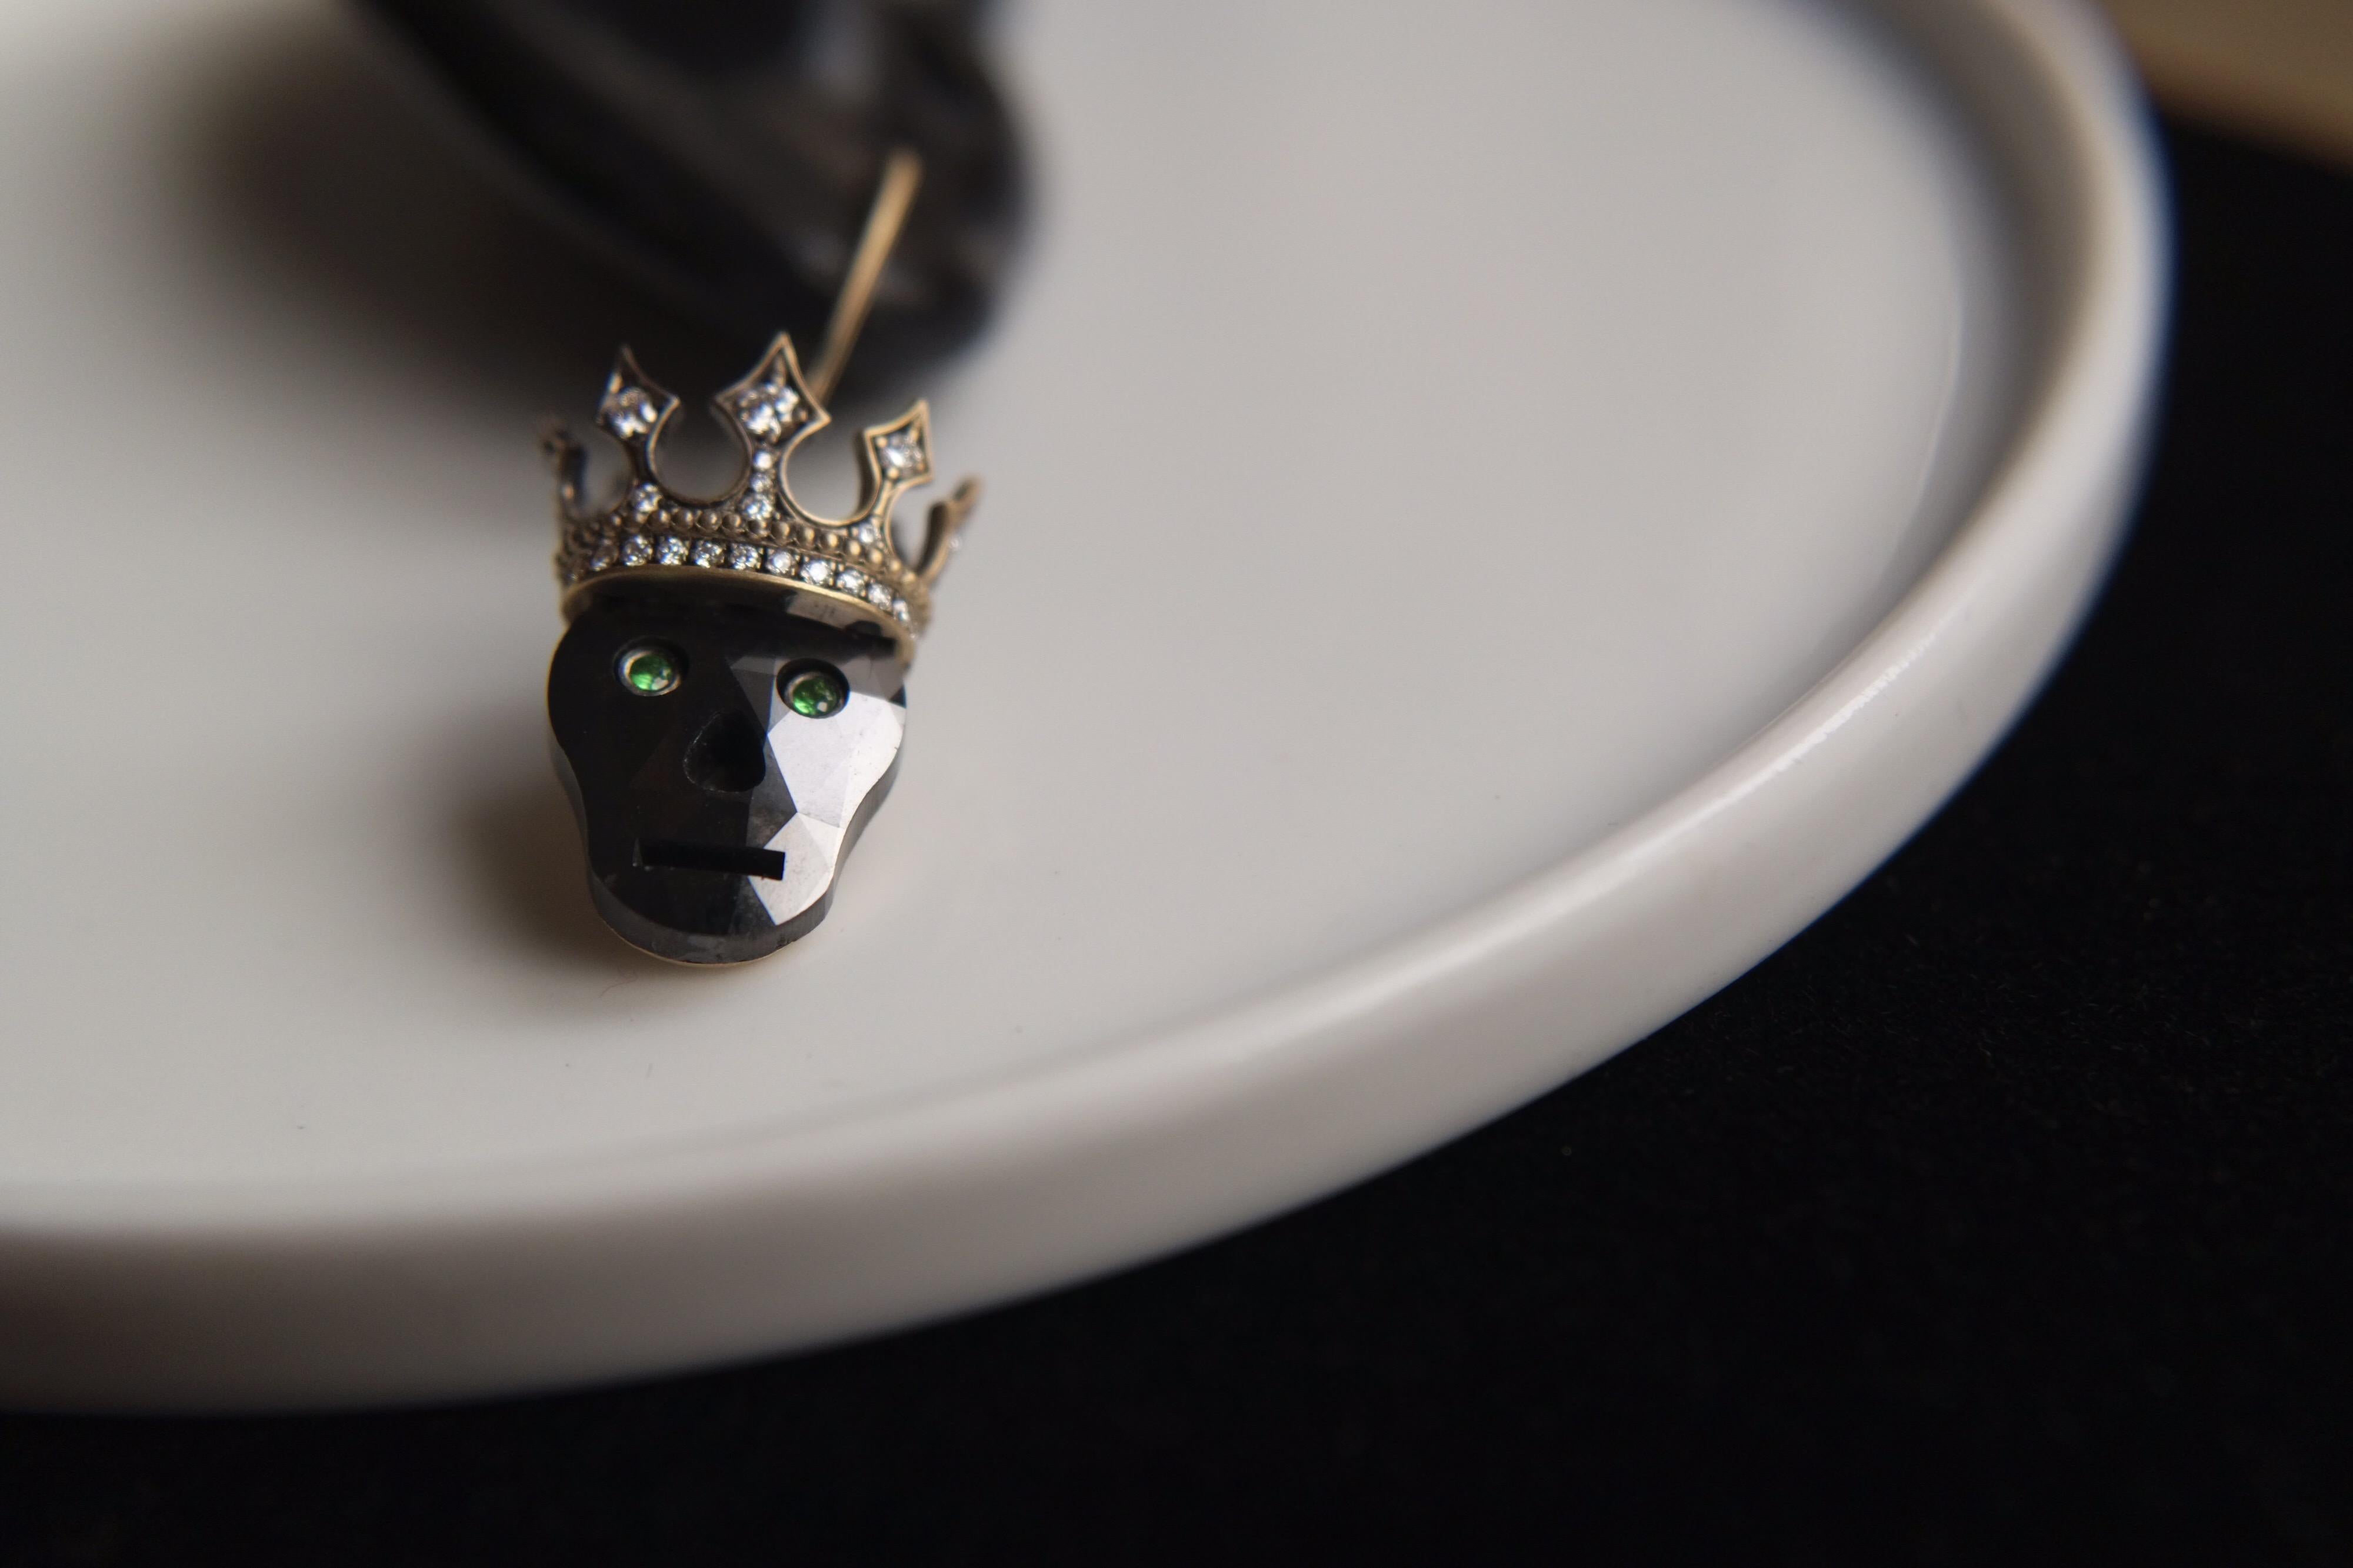 Contemporary Wendy Brandes Memento Mori Black Diamond Skull Earrings With Crowns